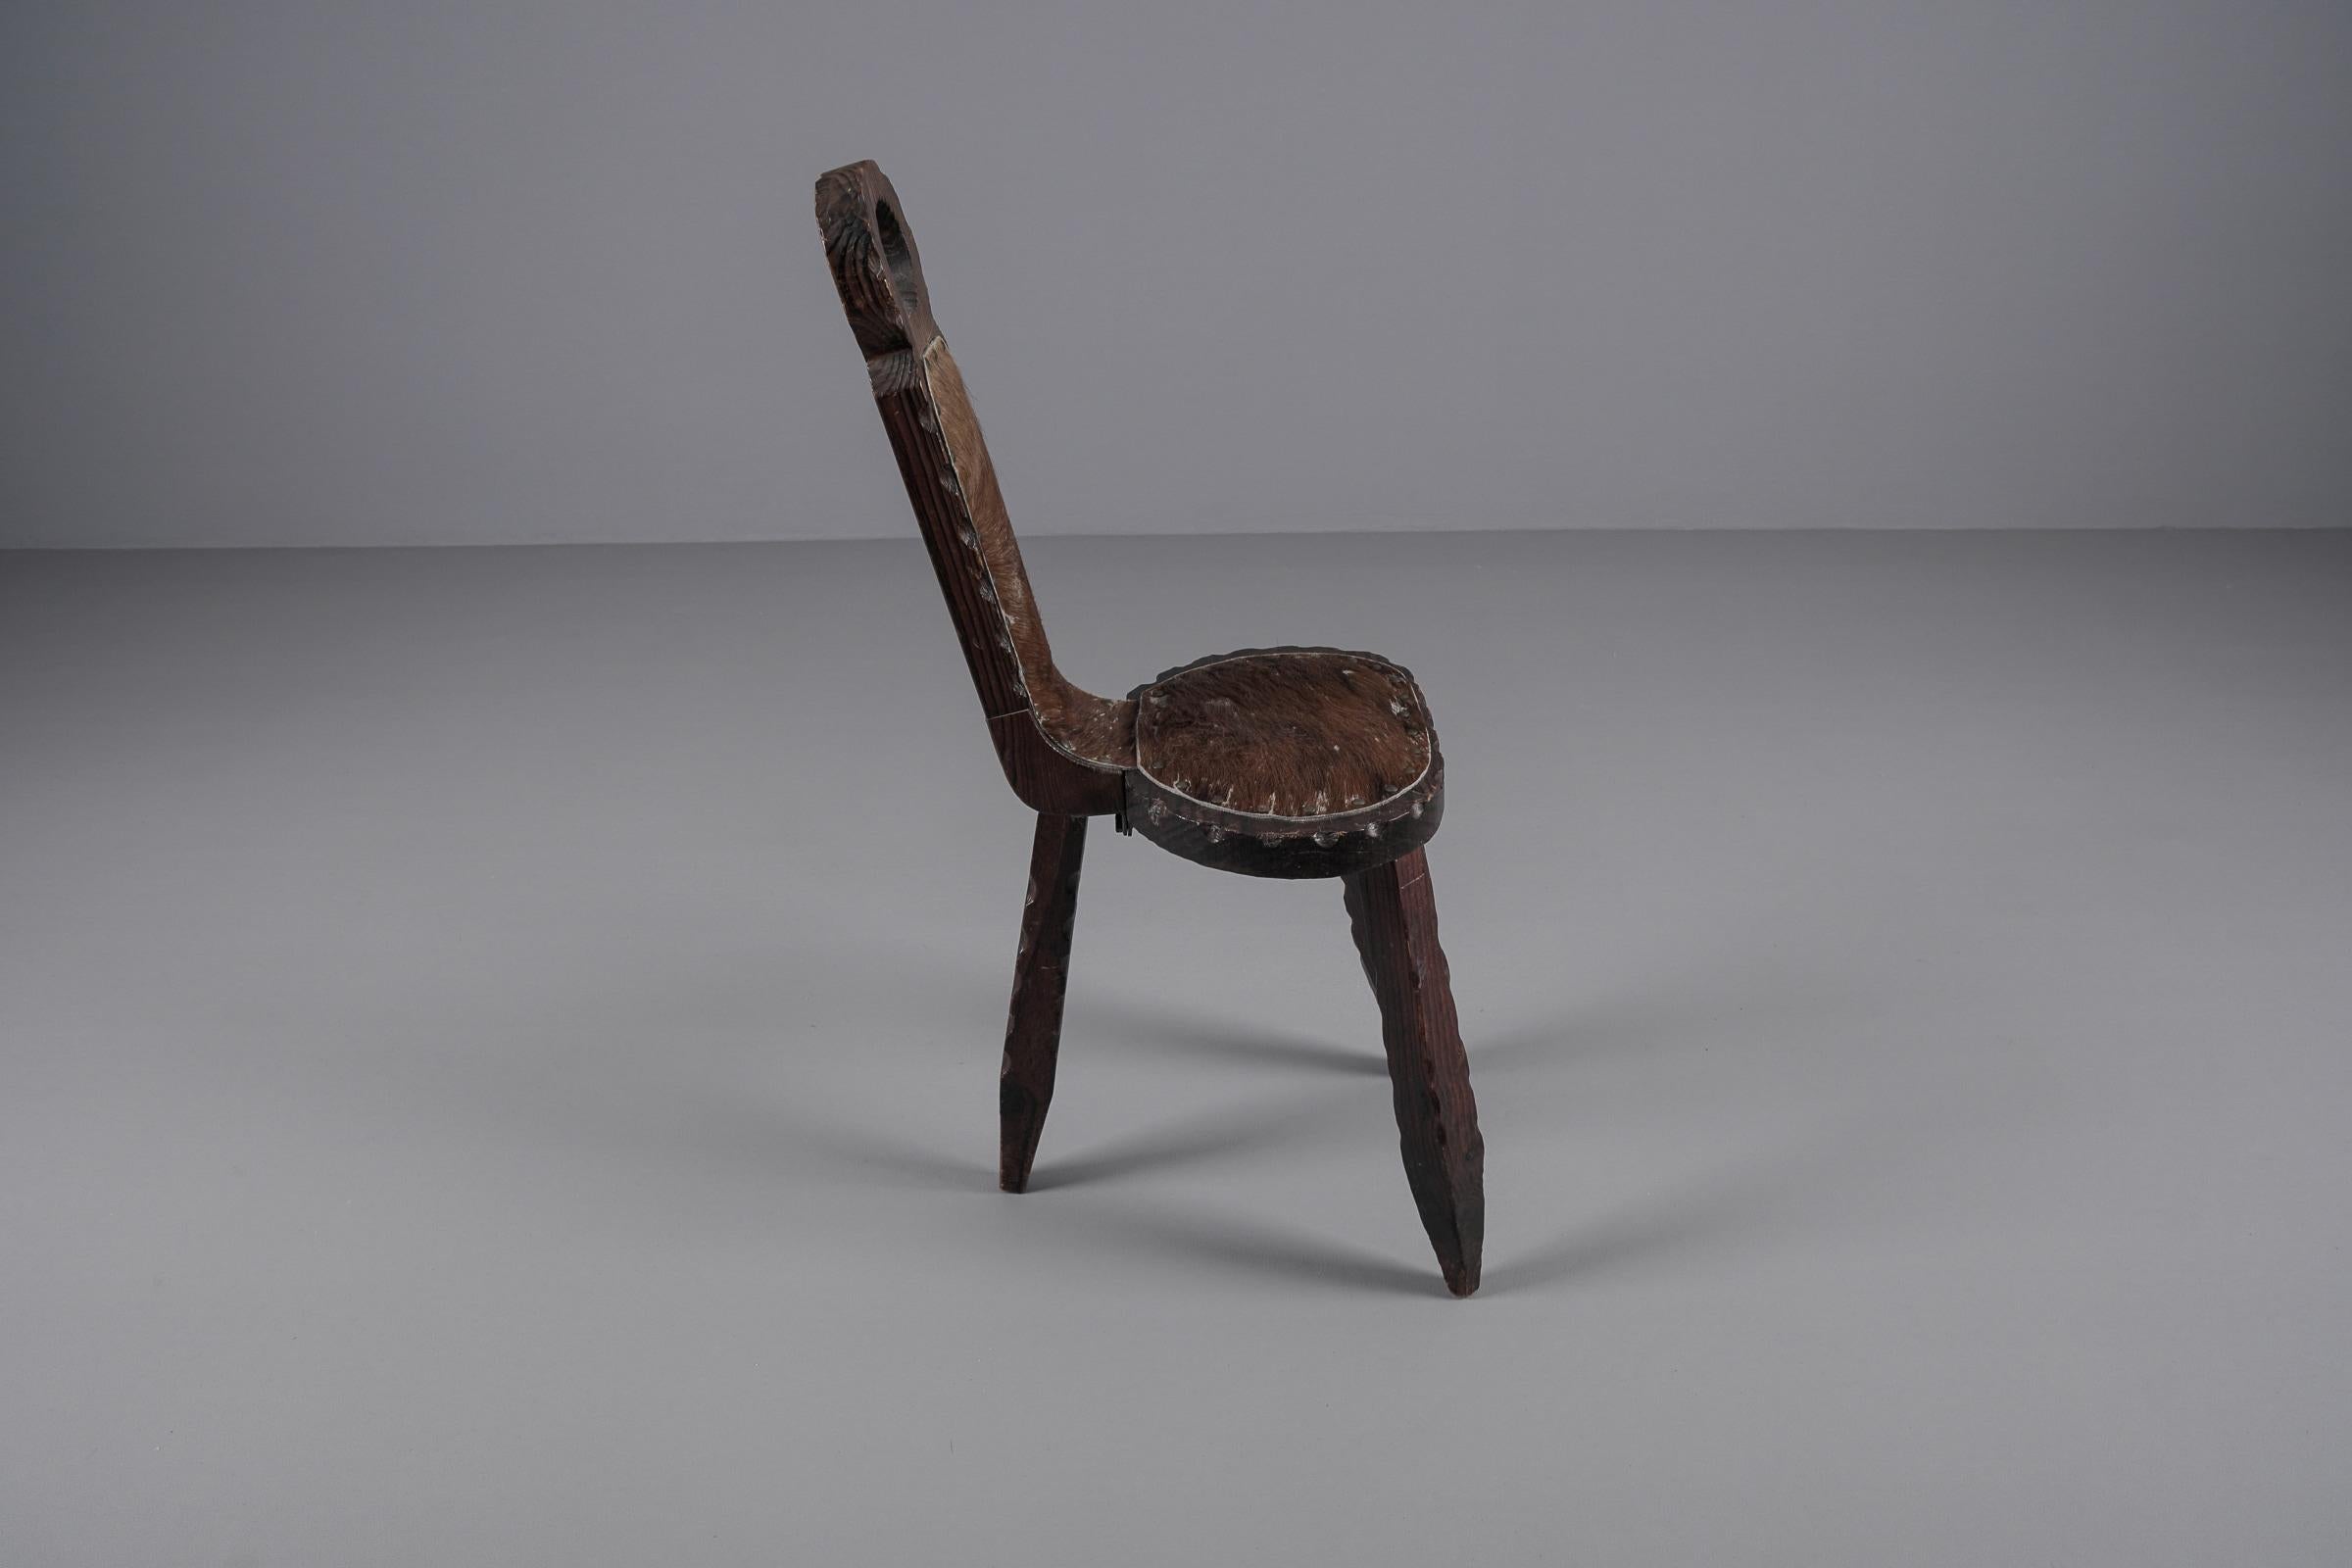 Hand-Carved 3-Legged Brutalist Rustic Modern Sculptured Chair, 1960s France For Sale